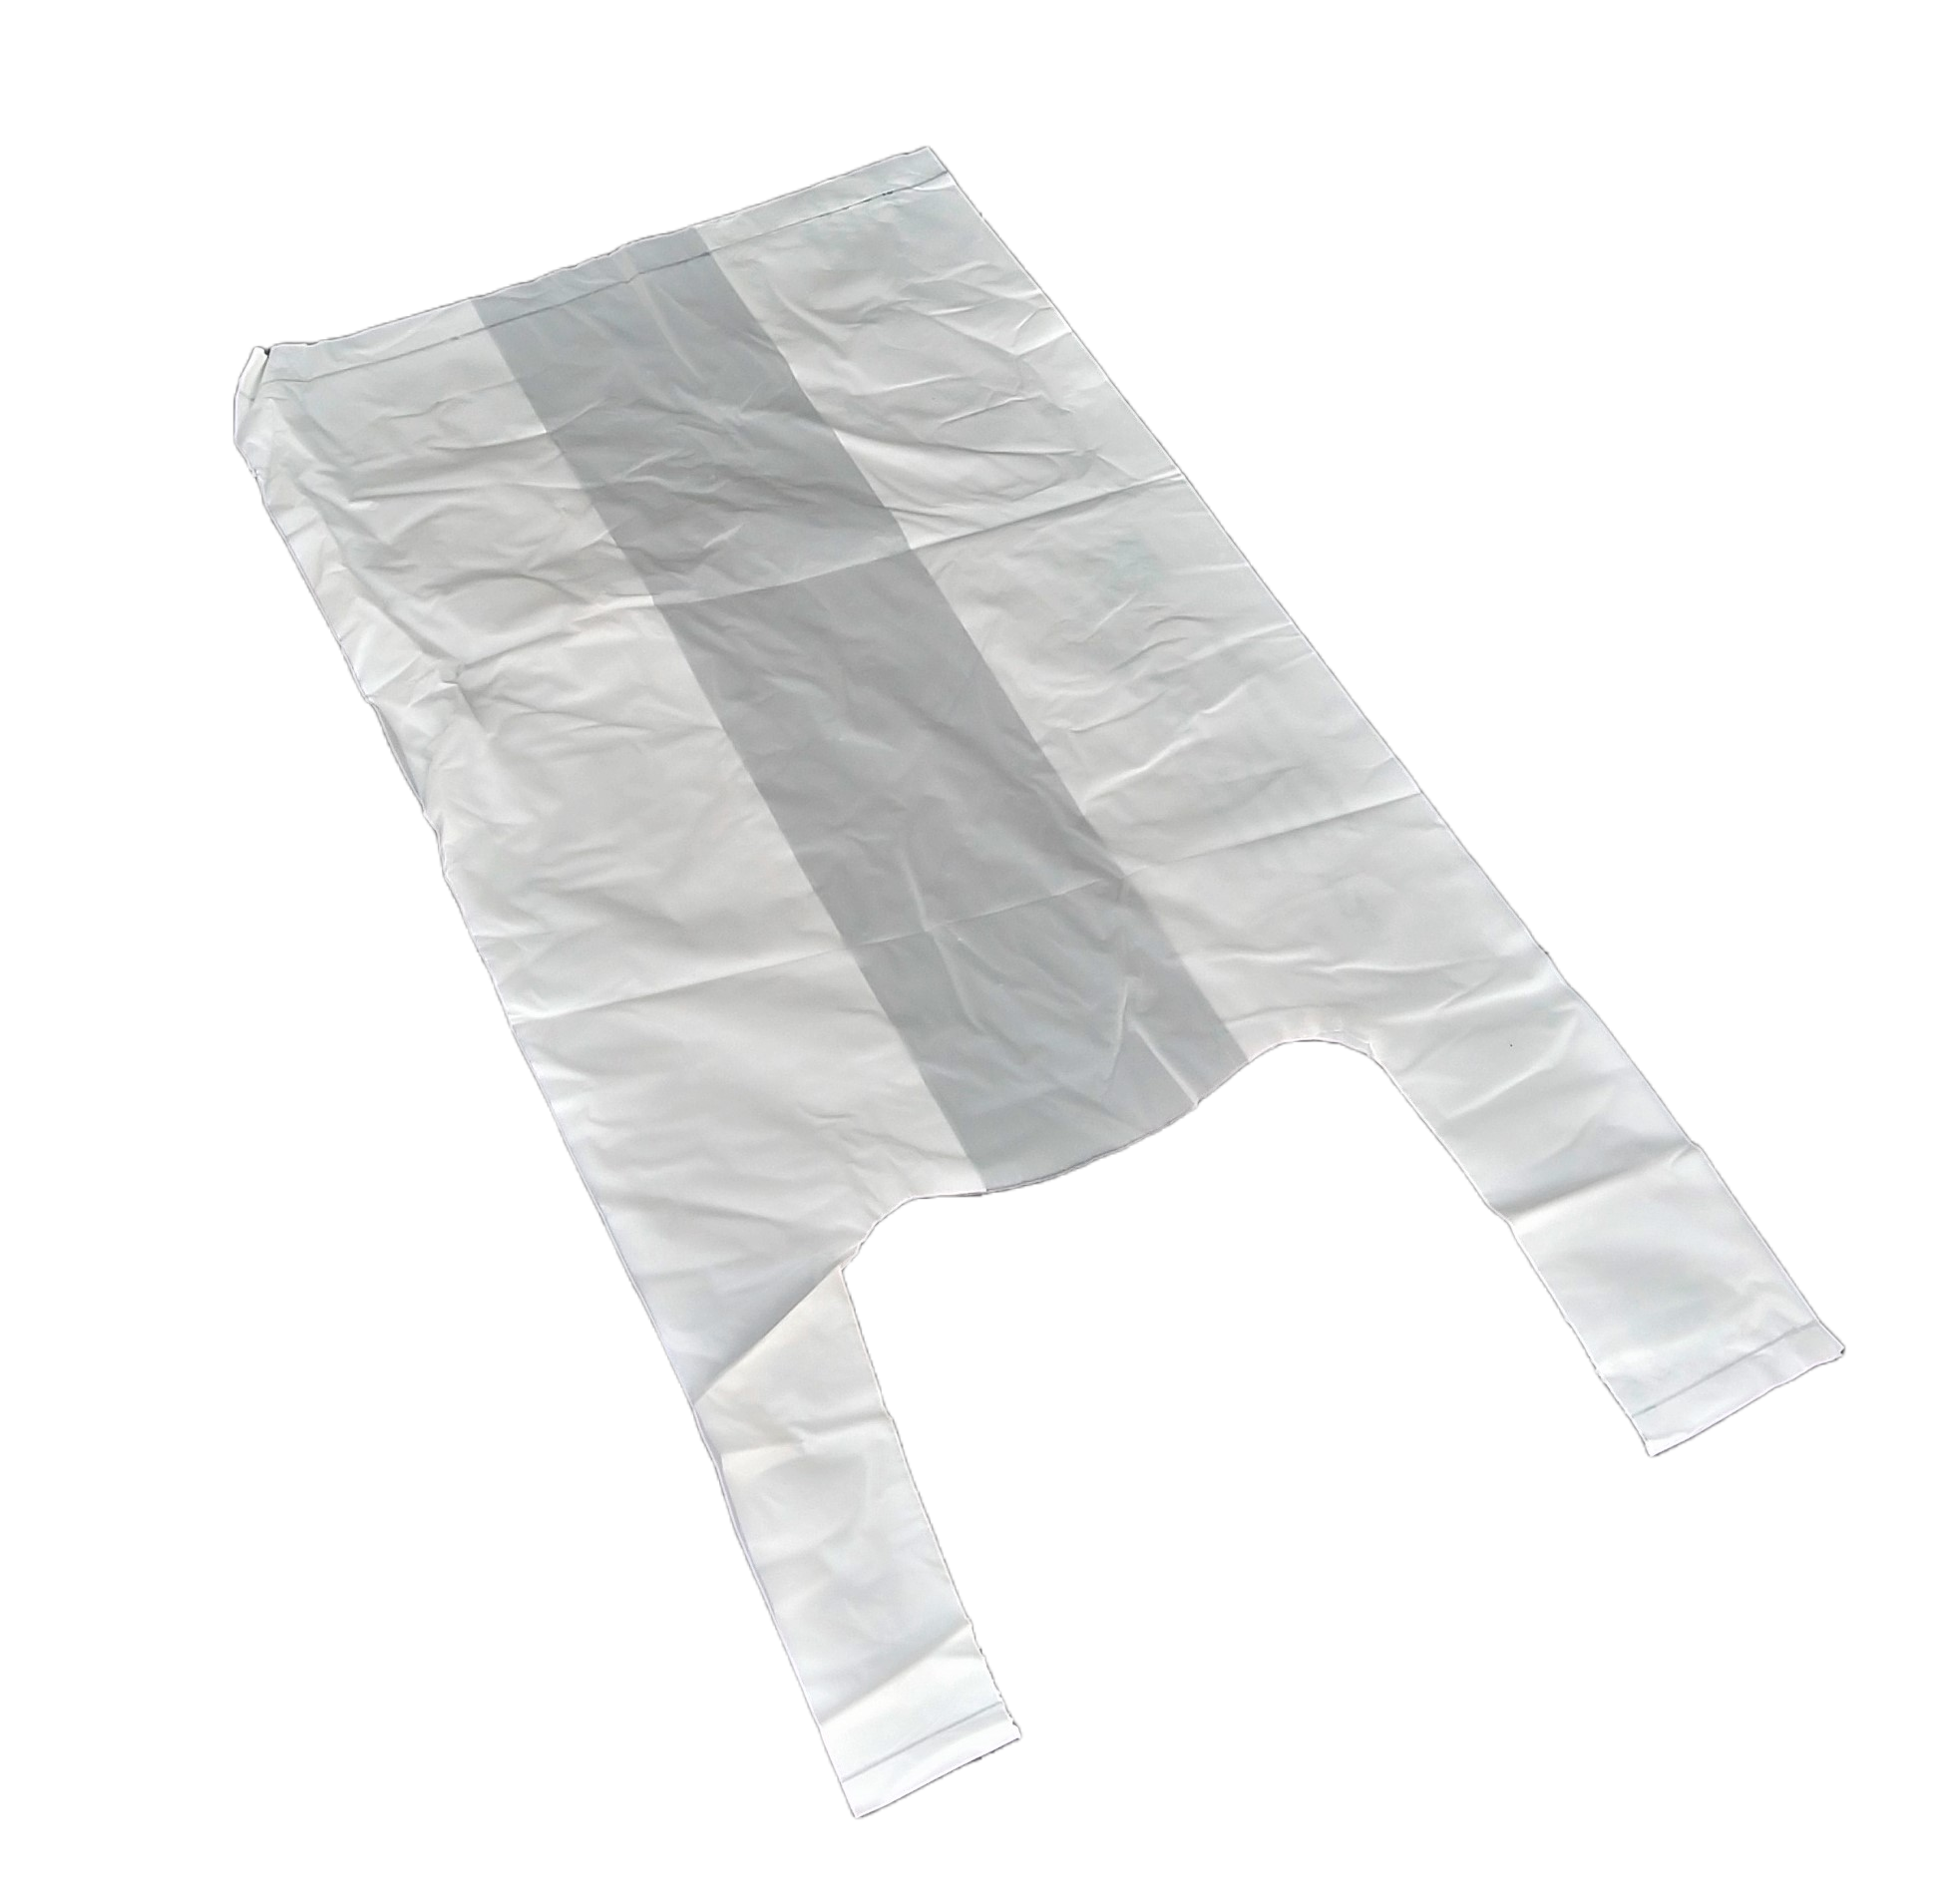 Single Use Carry Out Plastic Bag Ordinance | Radnor, PA